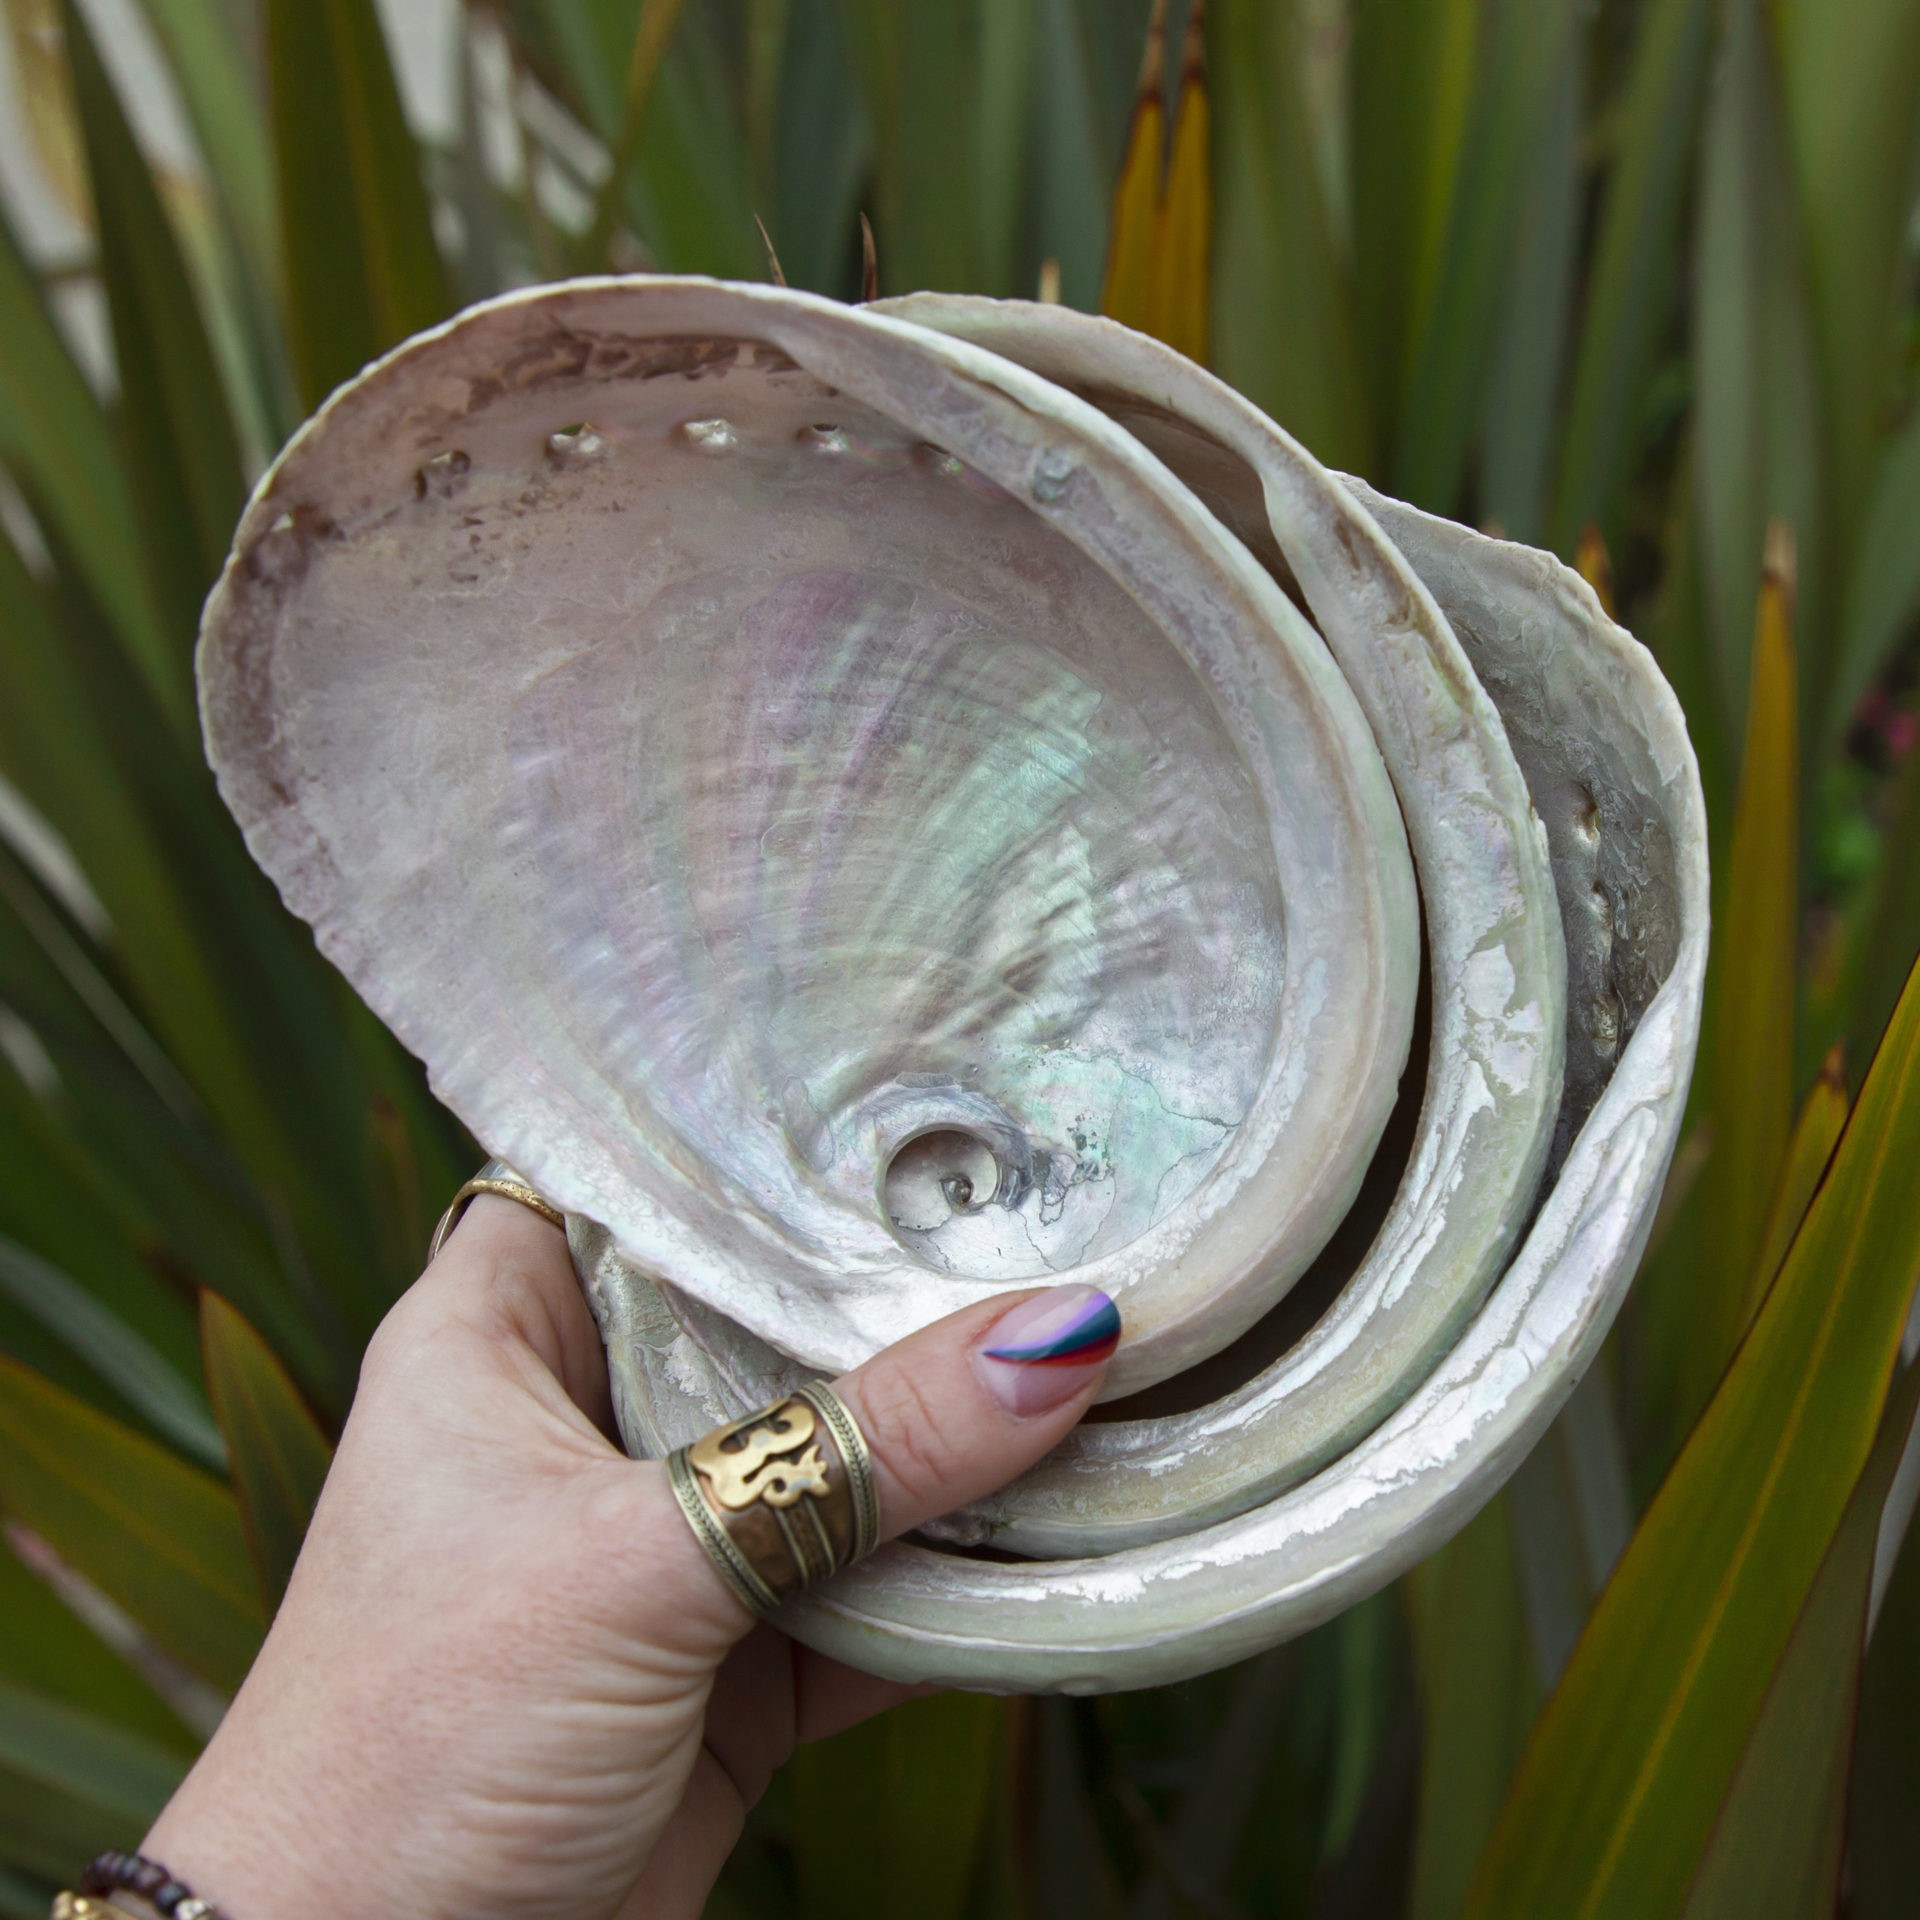 Abalone Shell Jewelry  Custom-Designed Jewelry From Abalone Shell